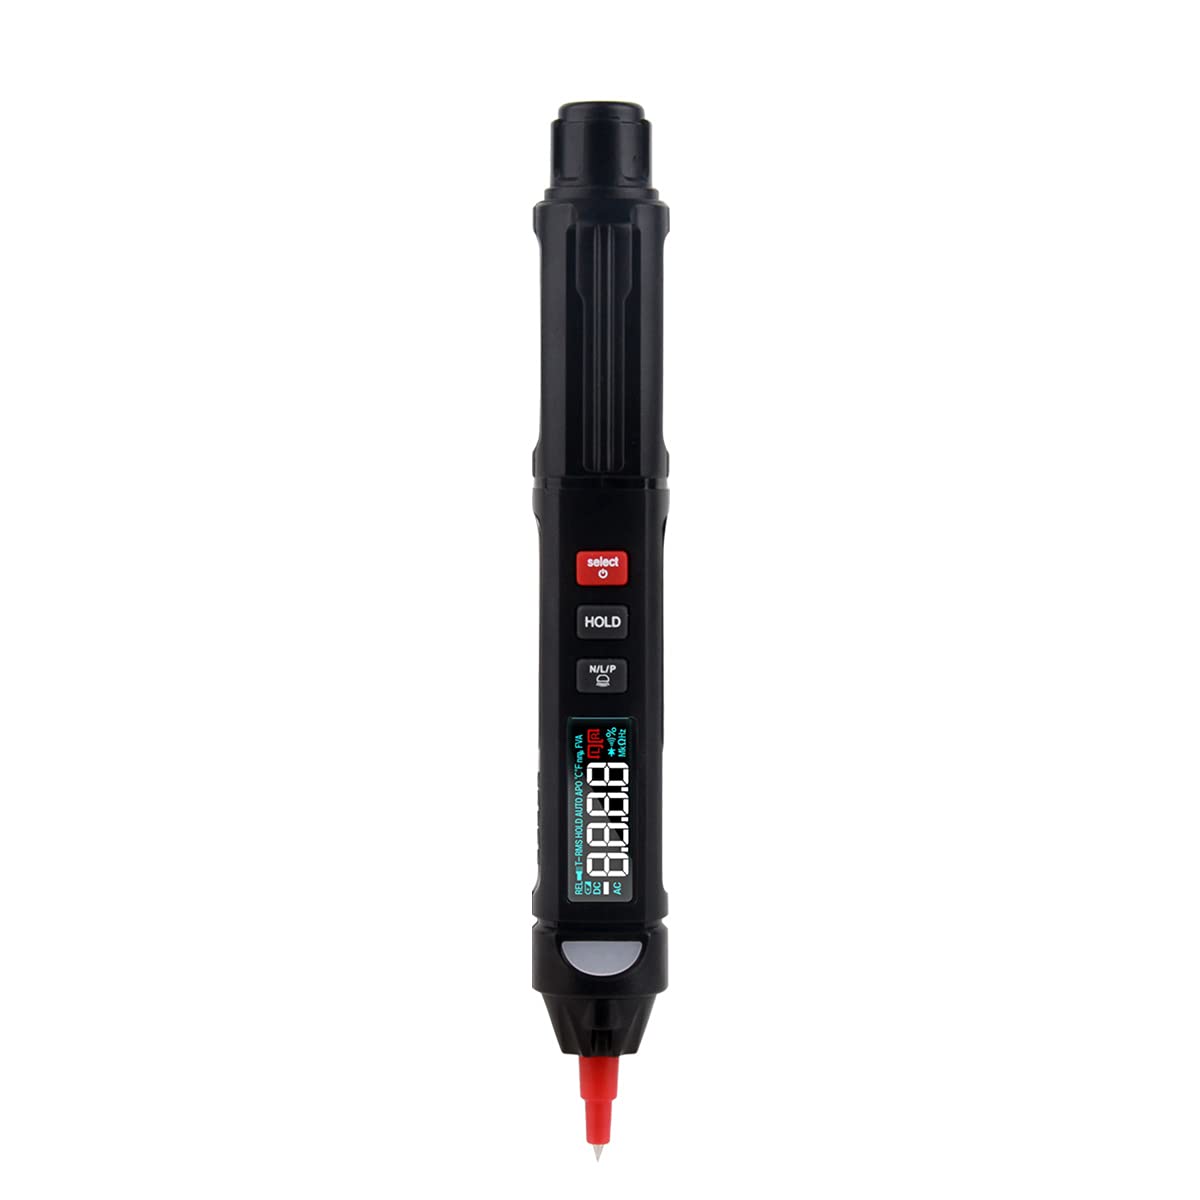 Noyafa-NF-5310B Pocket Digital Mini Pen Multimeter with DC/AC Voltage, Non-Contact Voltage Measuring